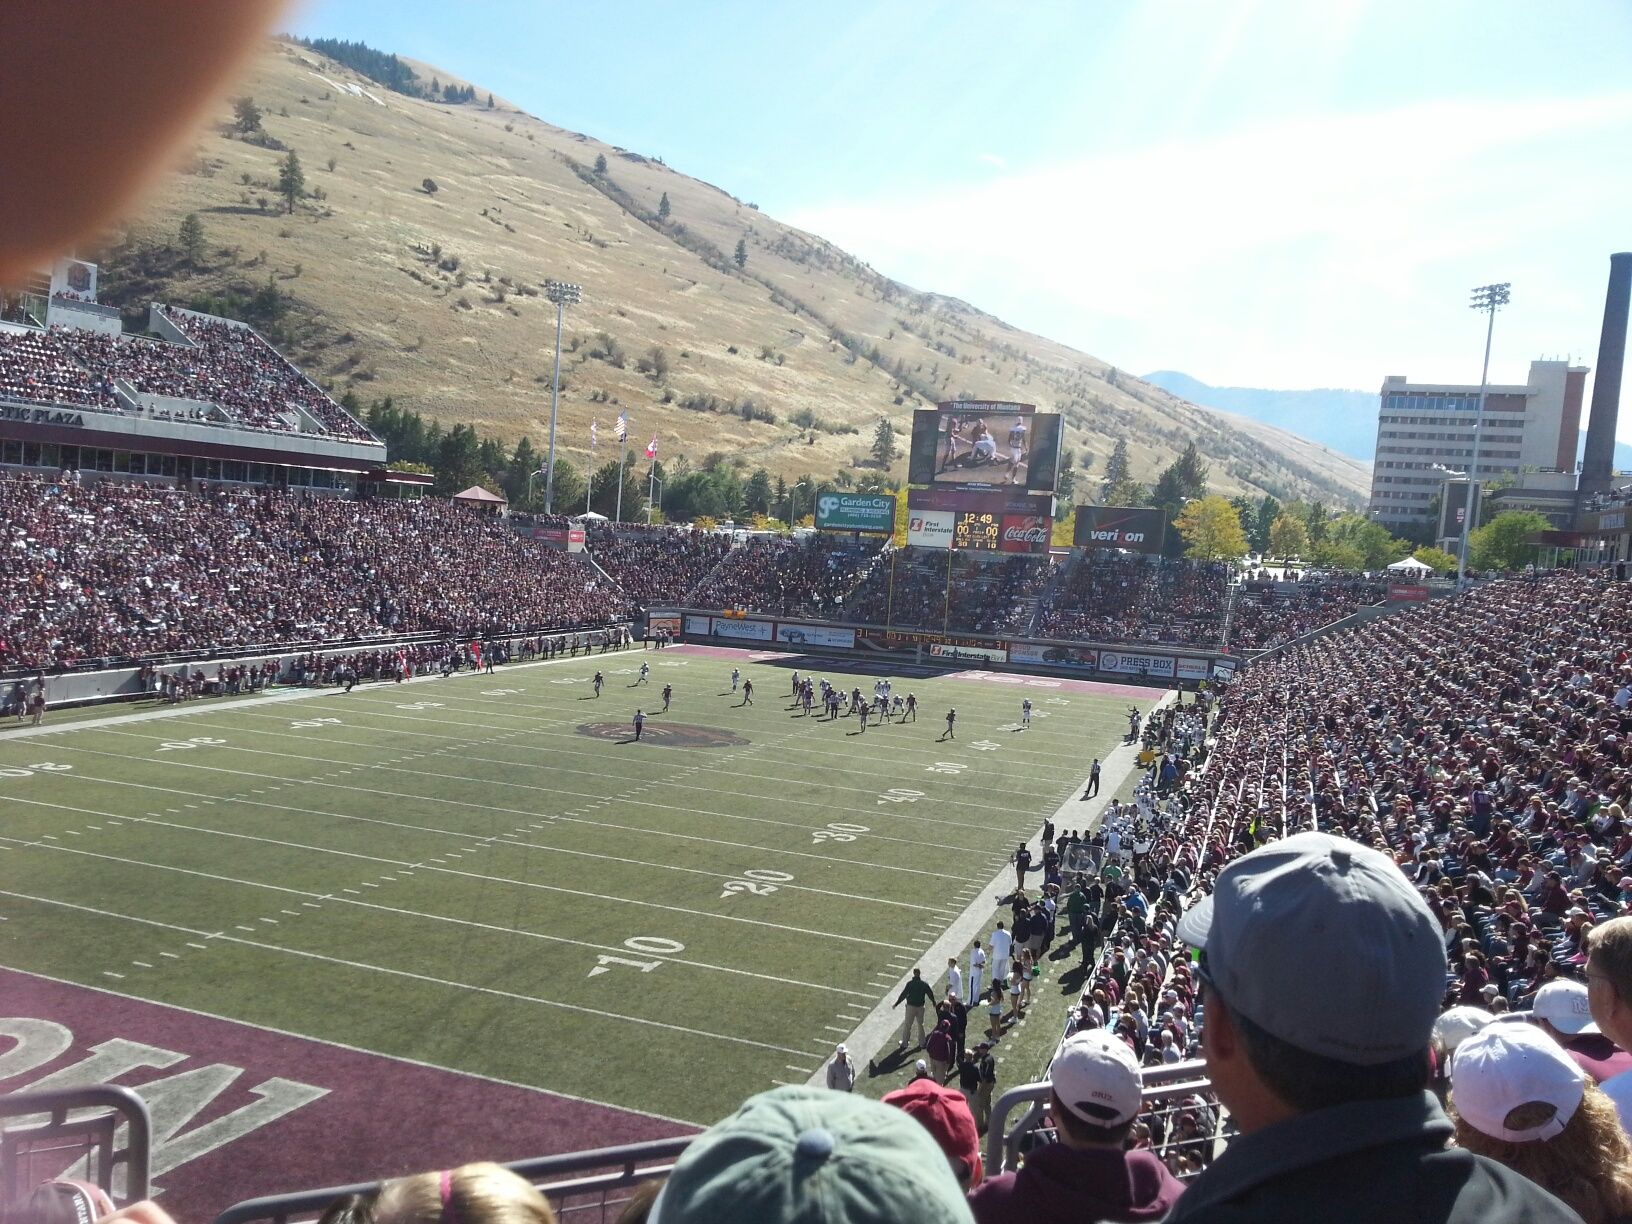 section 233-b, row 4 seat view  - washington-grizzly stadium